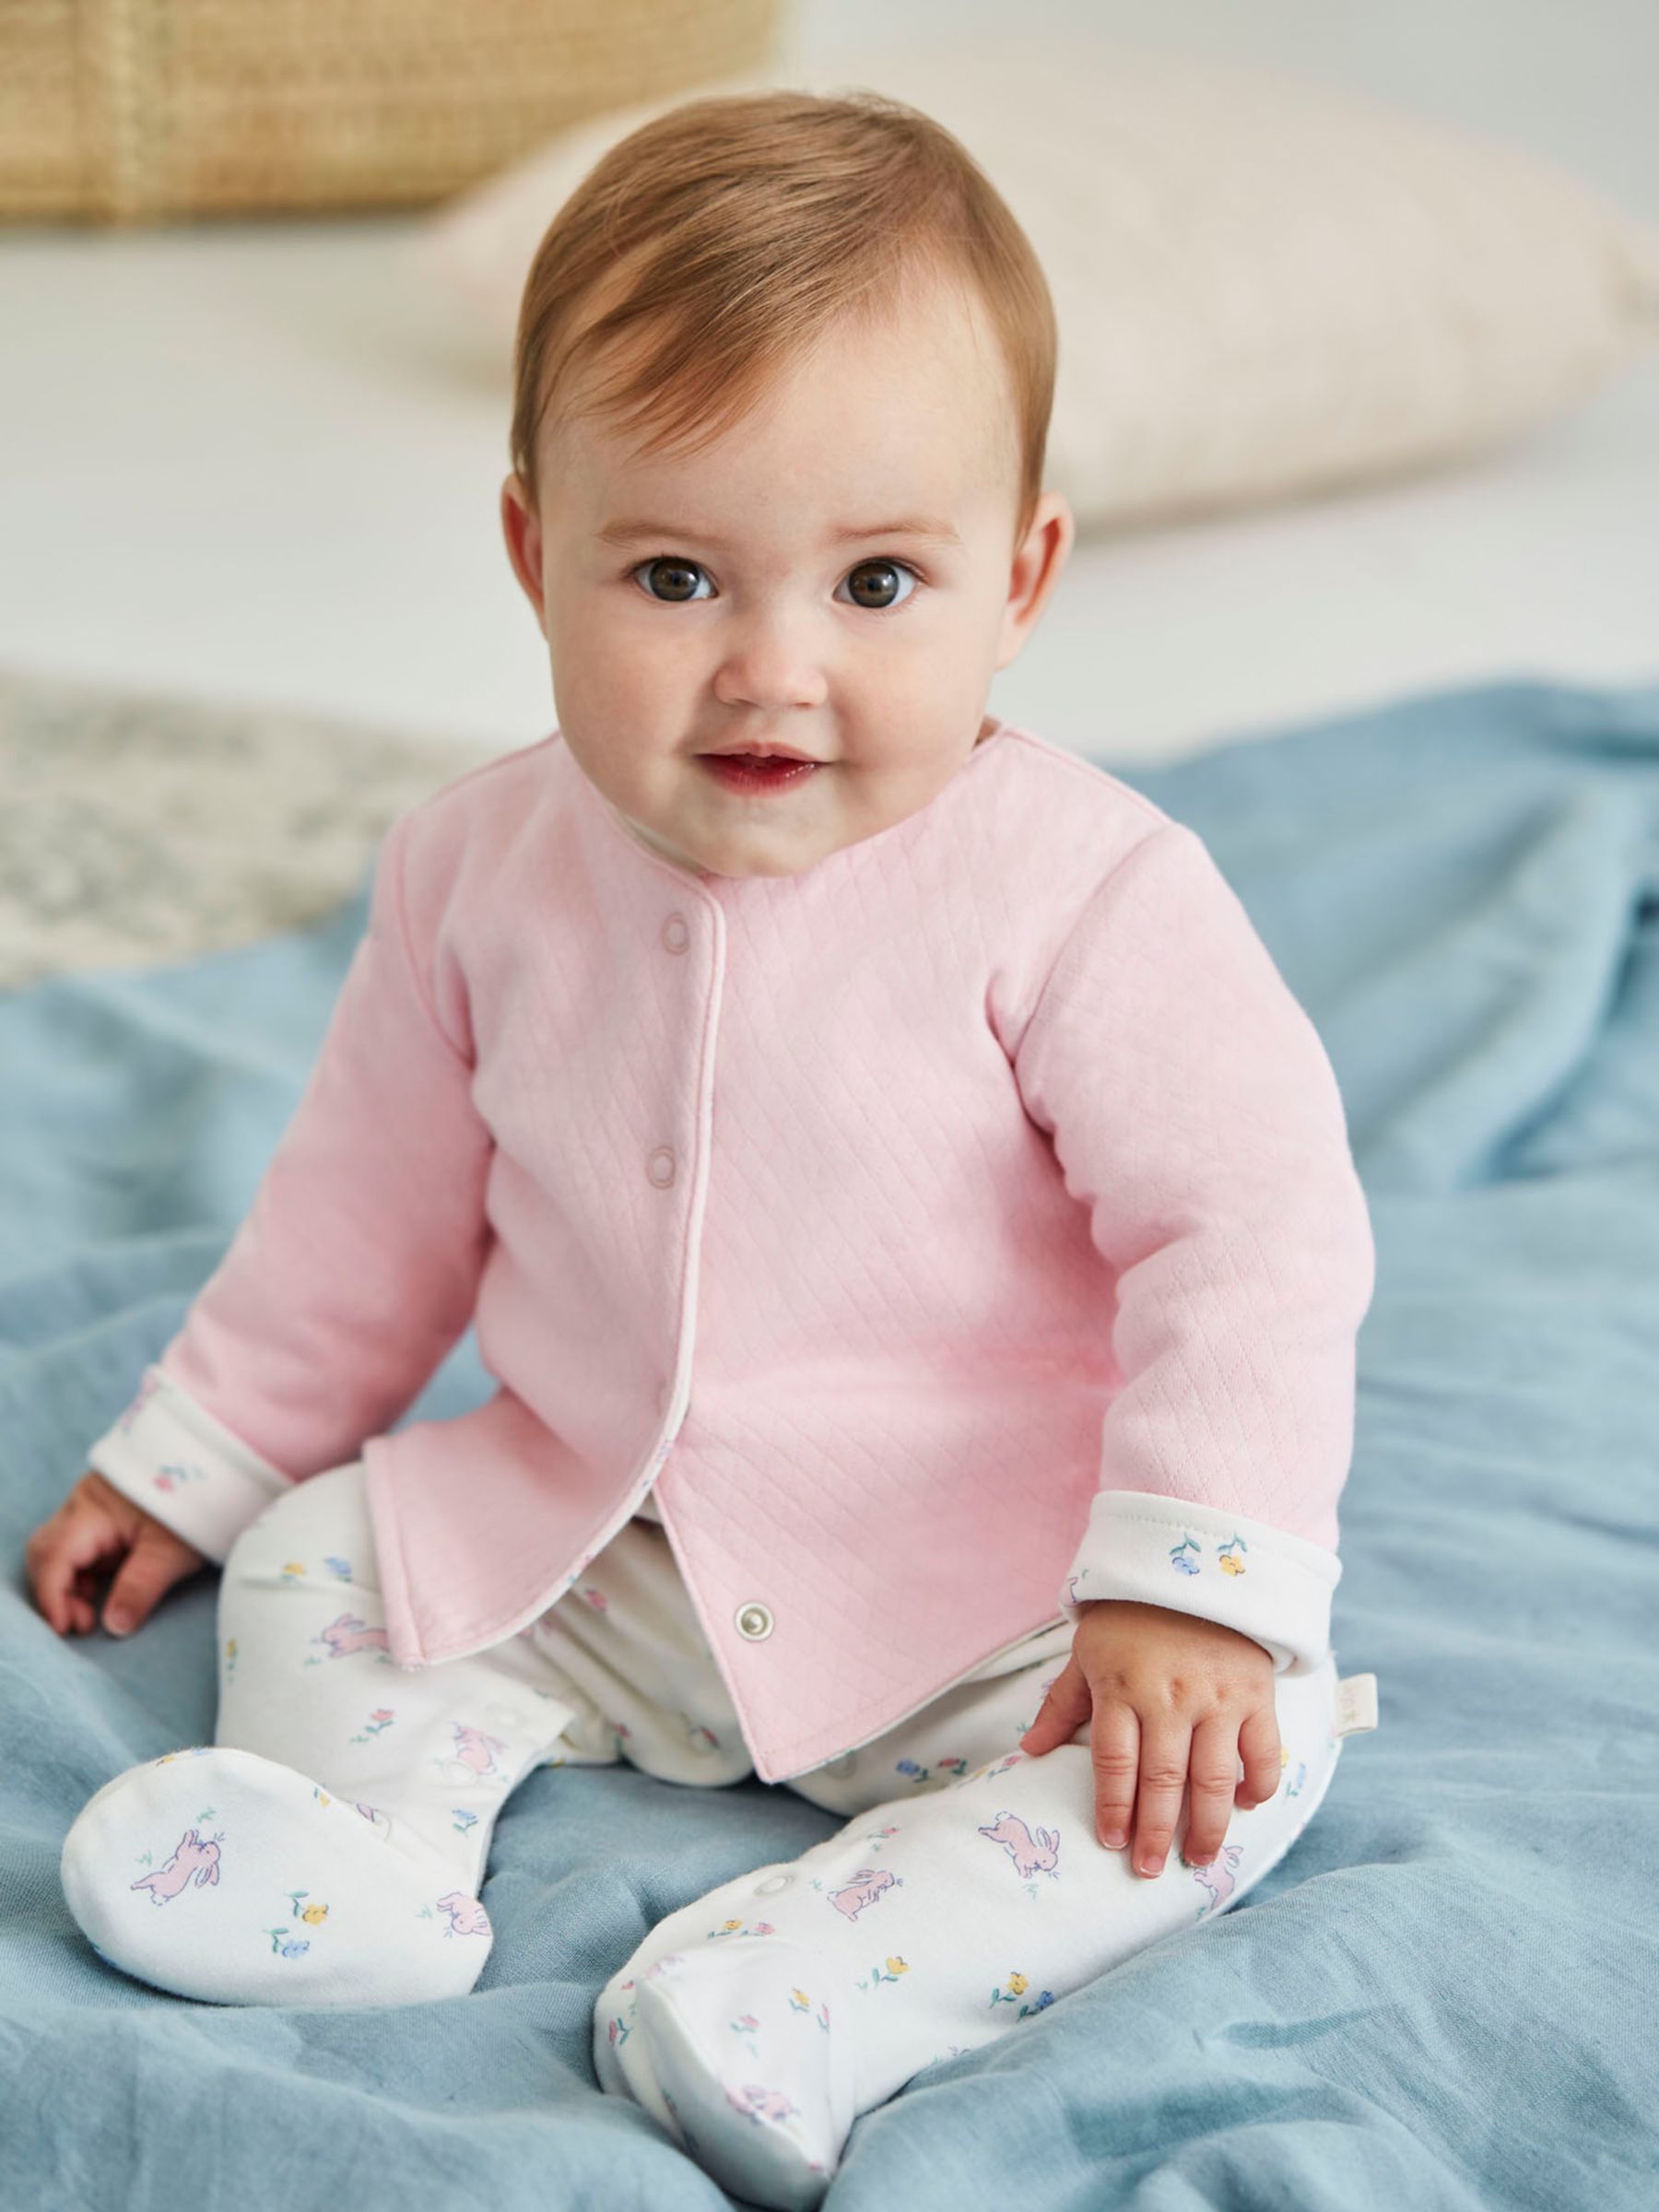 JoJo Maman Bébé 2-Piece Bunny Sleepsuit & Jacket Set, Pink/White, 3-6 months